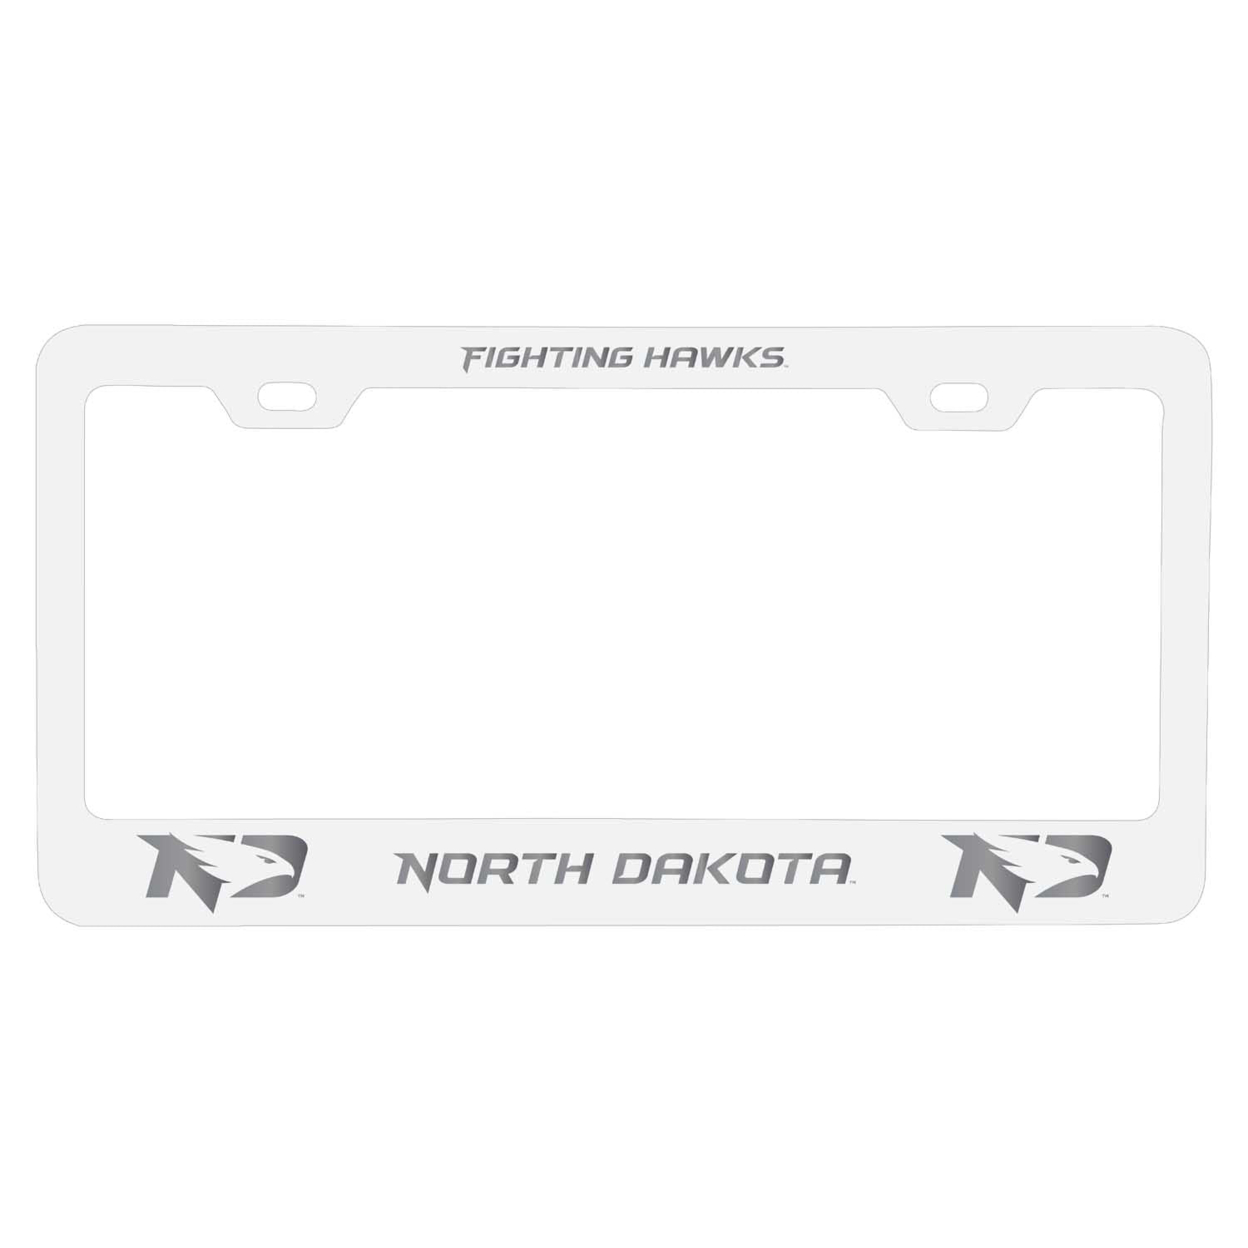 North Dakota Fighting Hawks Etched Metal License Plate Frame - Choose Your Color